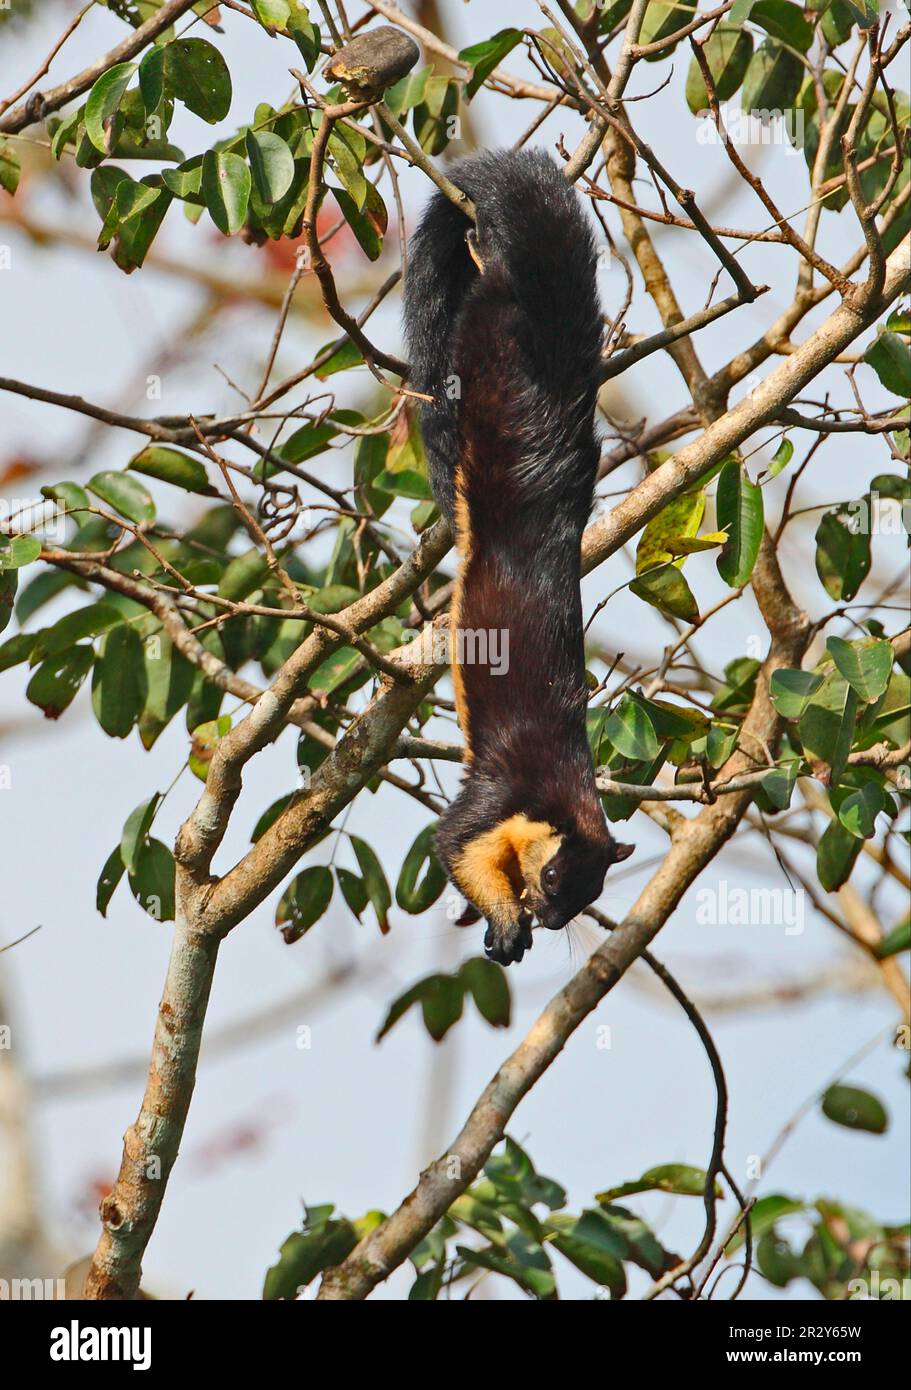 Black giant squirrel (Ratufa bicolor), Black Giant Squirrels, Rodents, Mammals, Animals, Black Giant Squirrel adult, feeding on fruit in tree Stock Photo